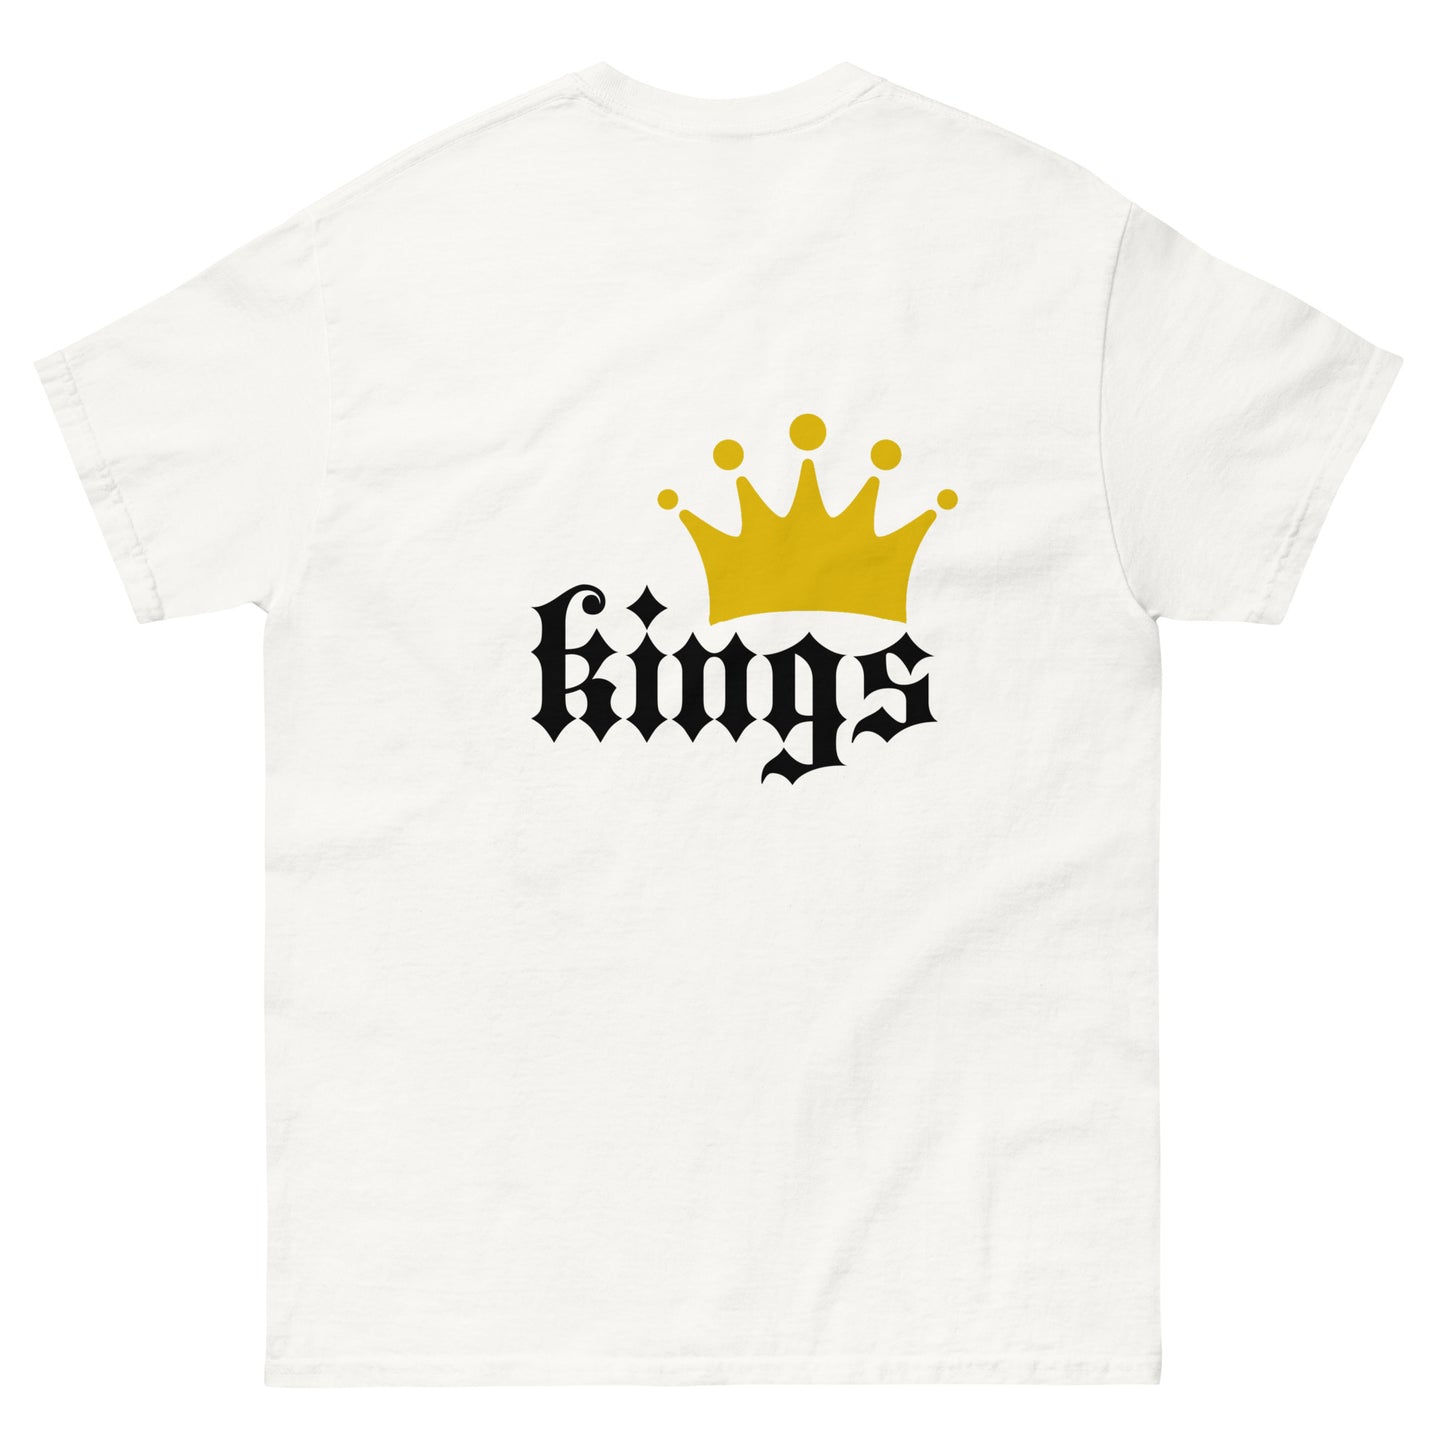 Classic Kings T-Shirt - Unisex